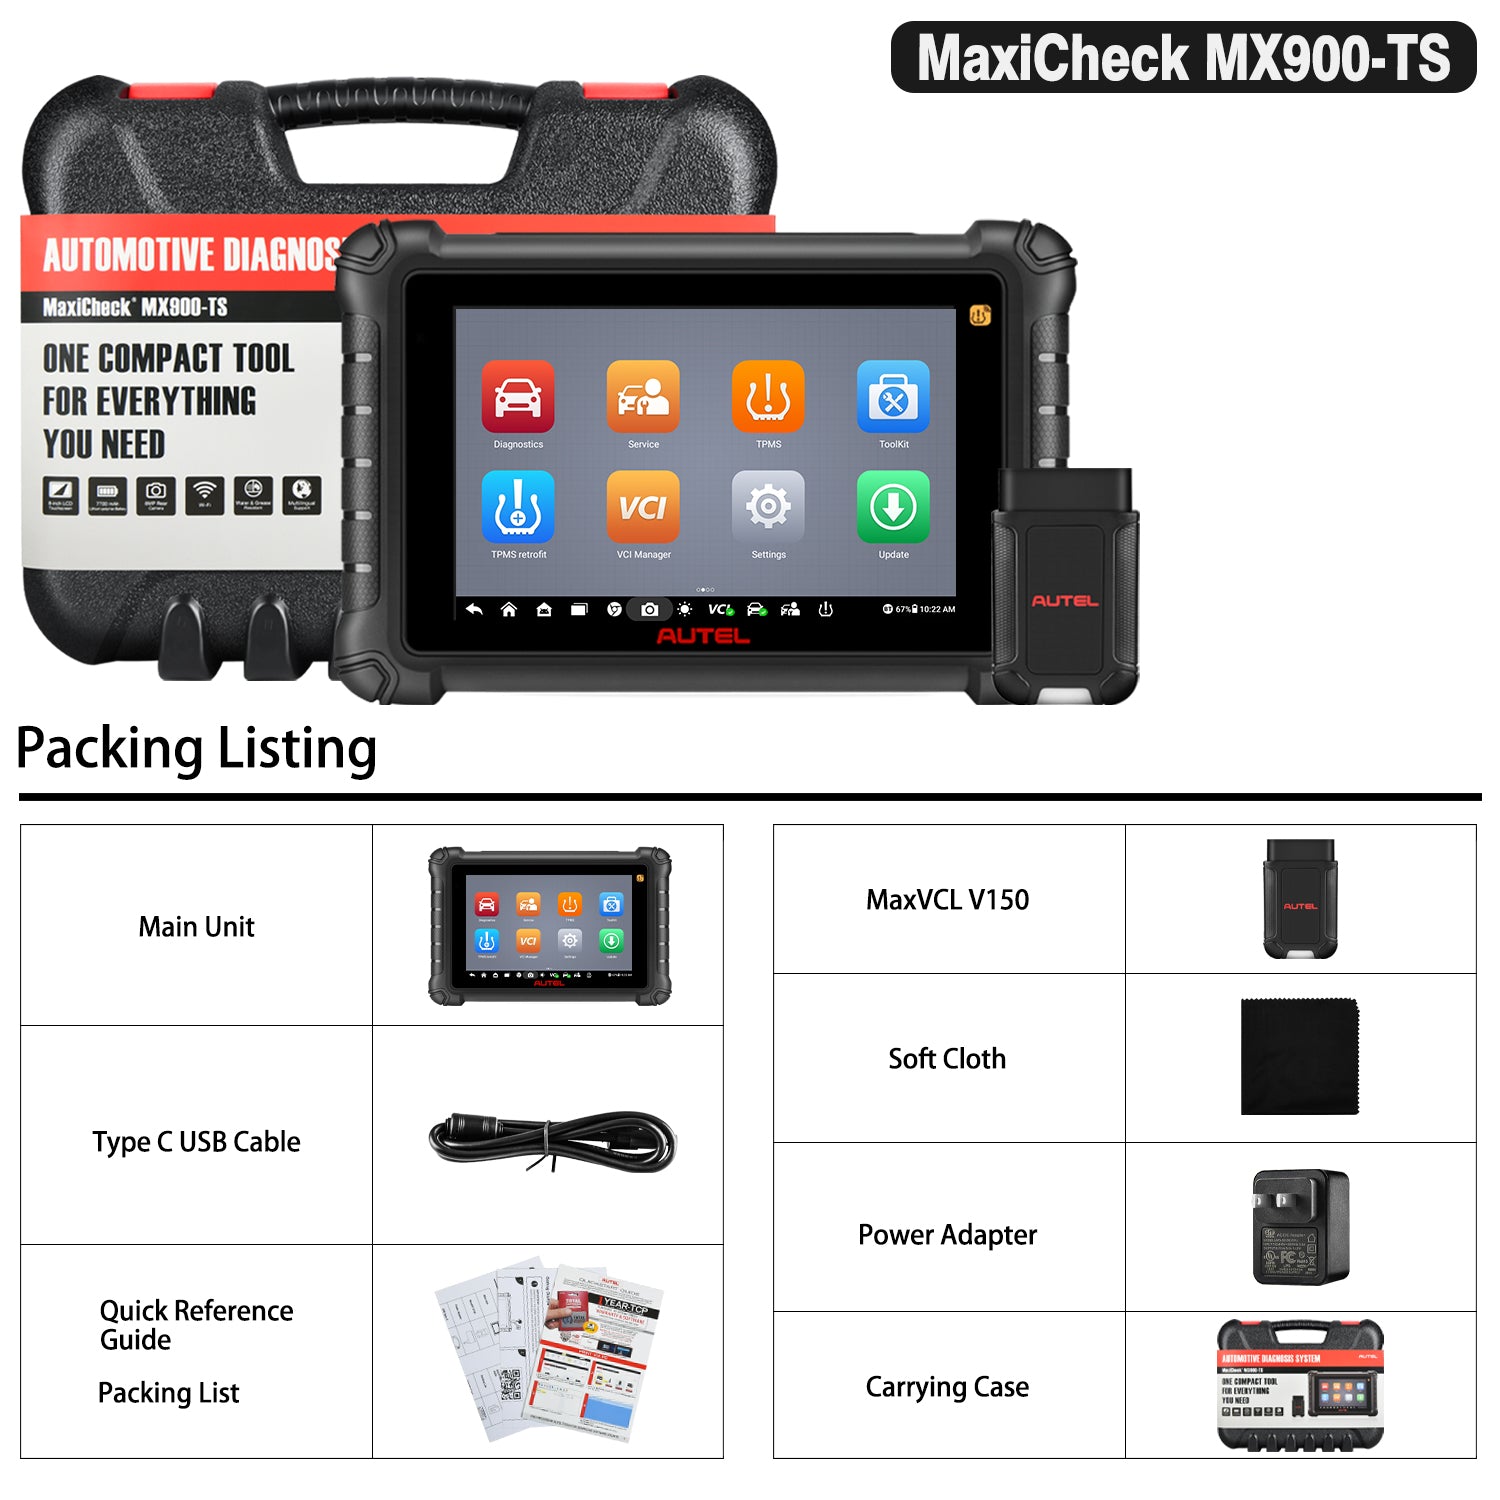 Autel Maxicheck MX900-TS Packing Listing